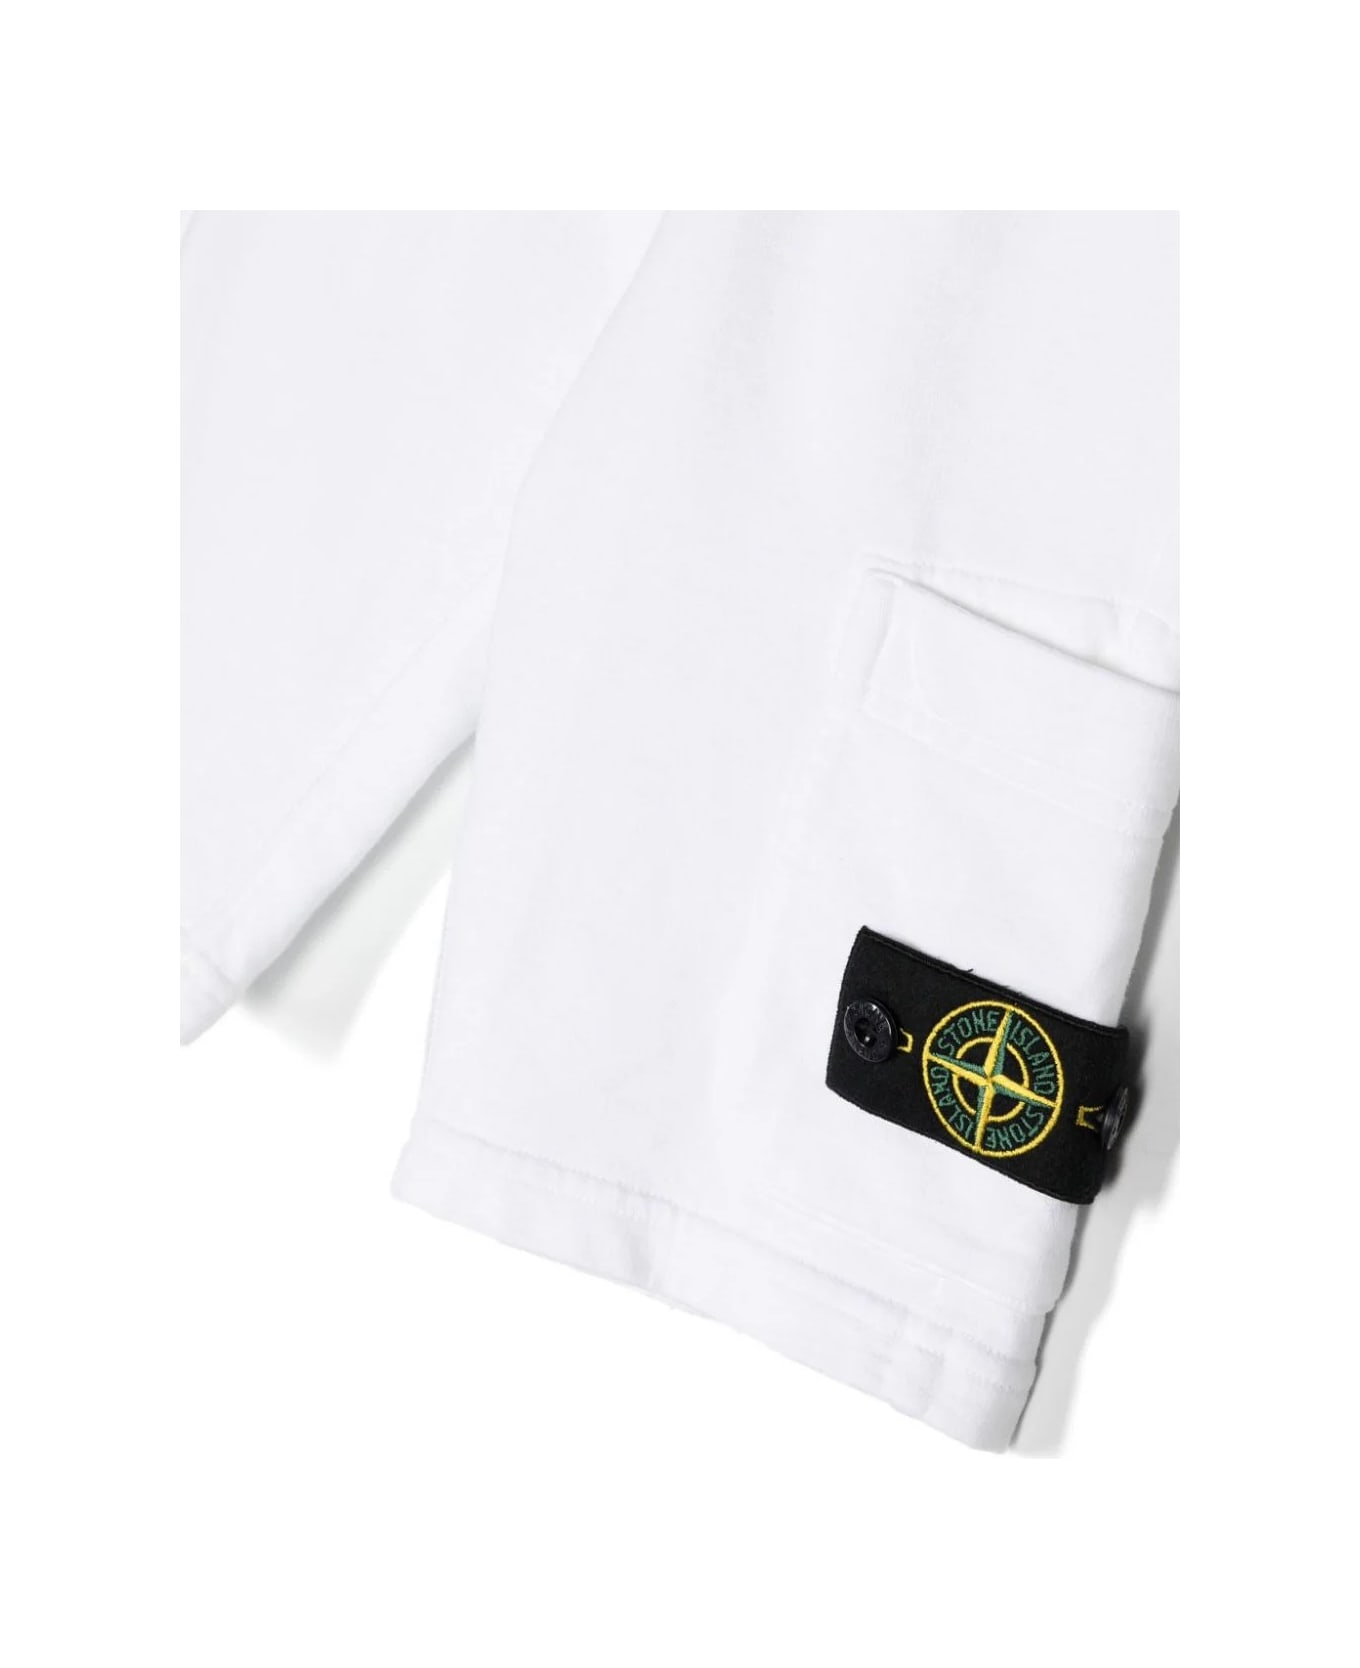 Stone Island Junior White Sports Shorts With Logo - Bianco